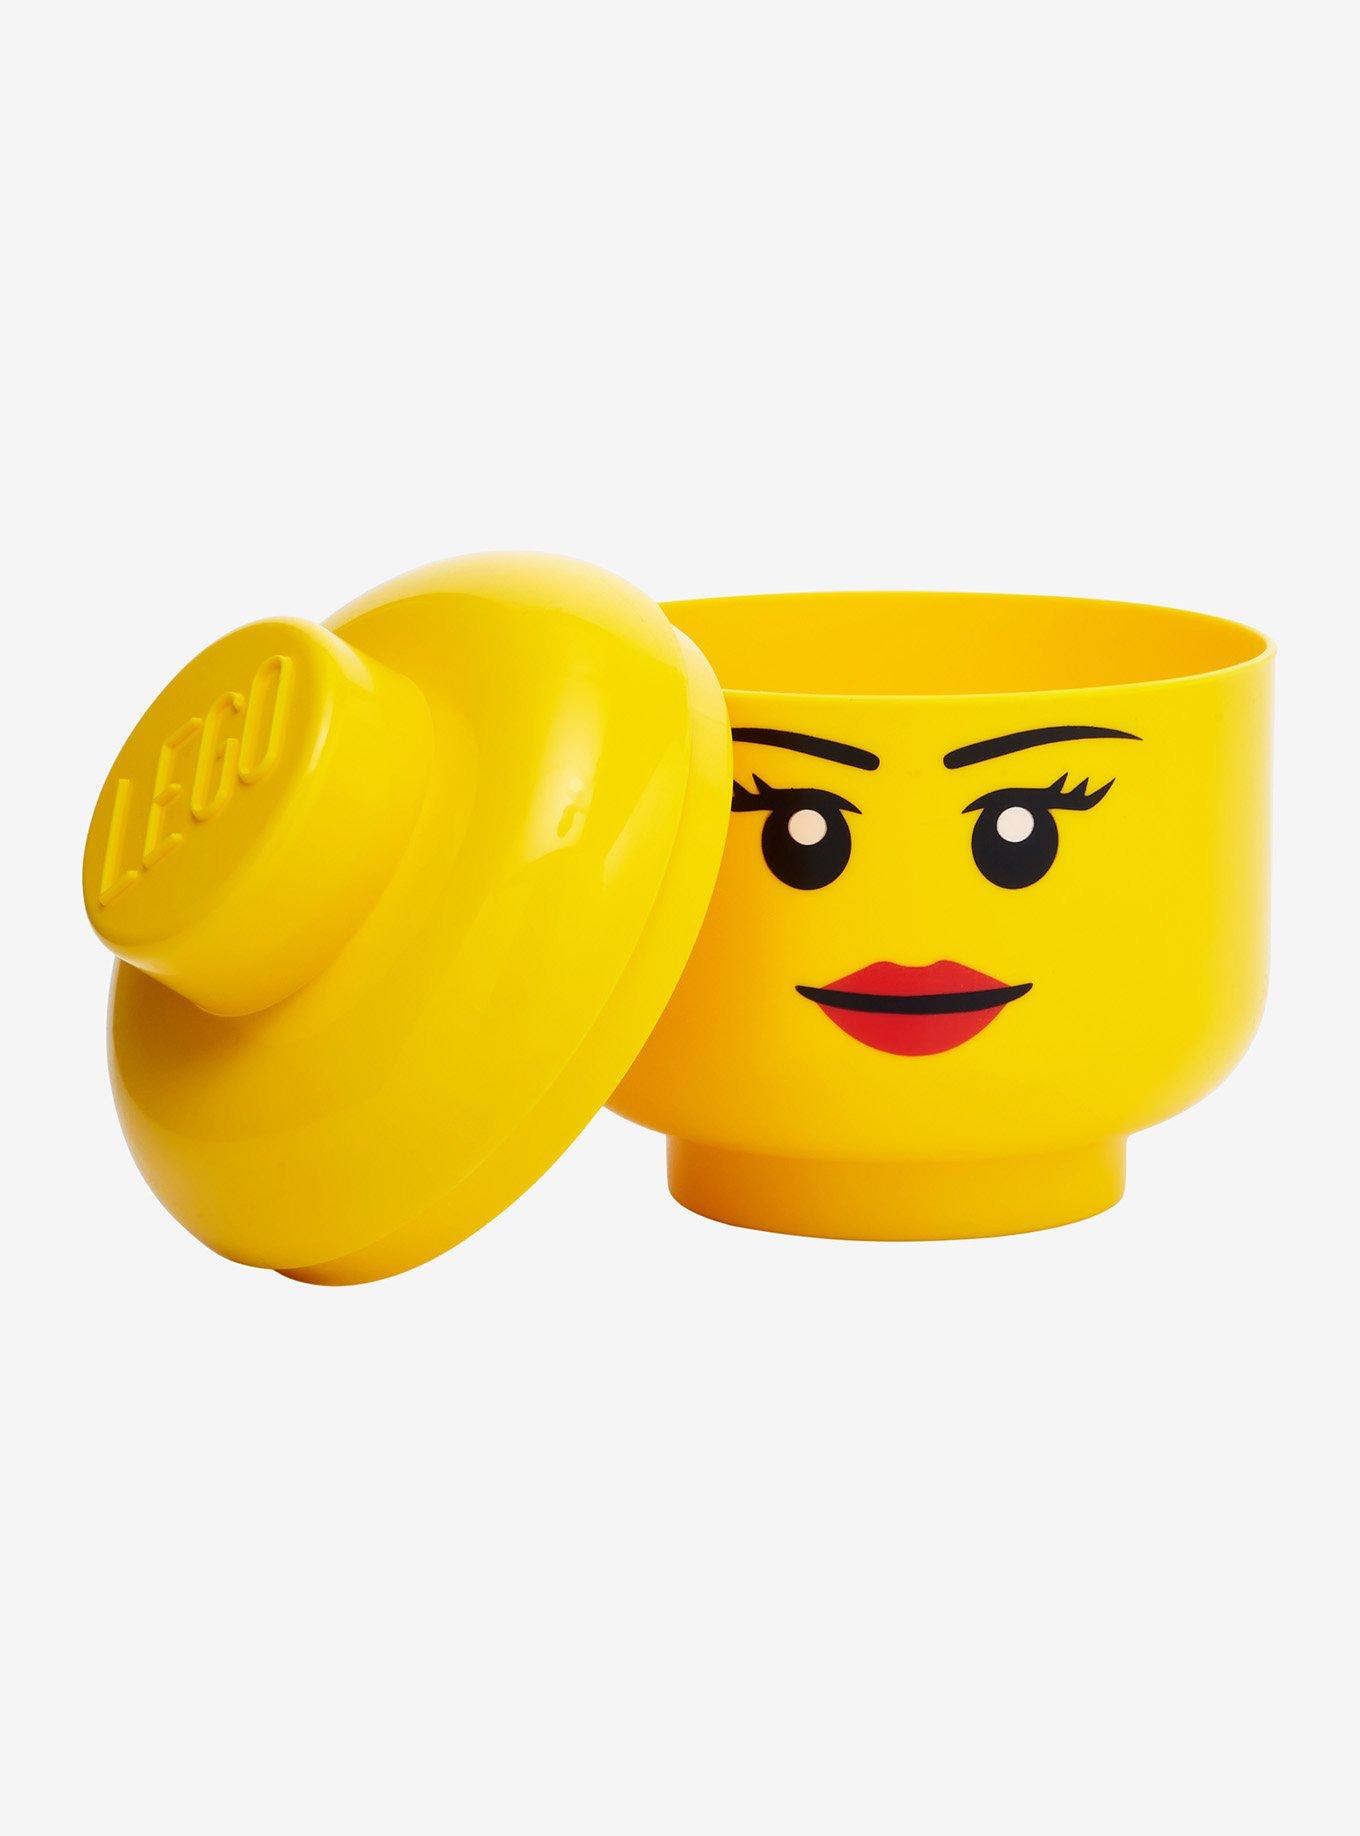 LEGO Girl Mini Storage Head, , alternate